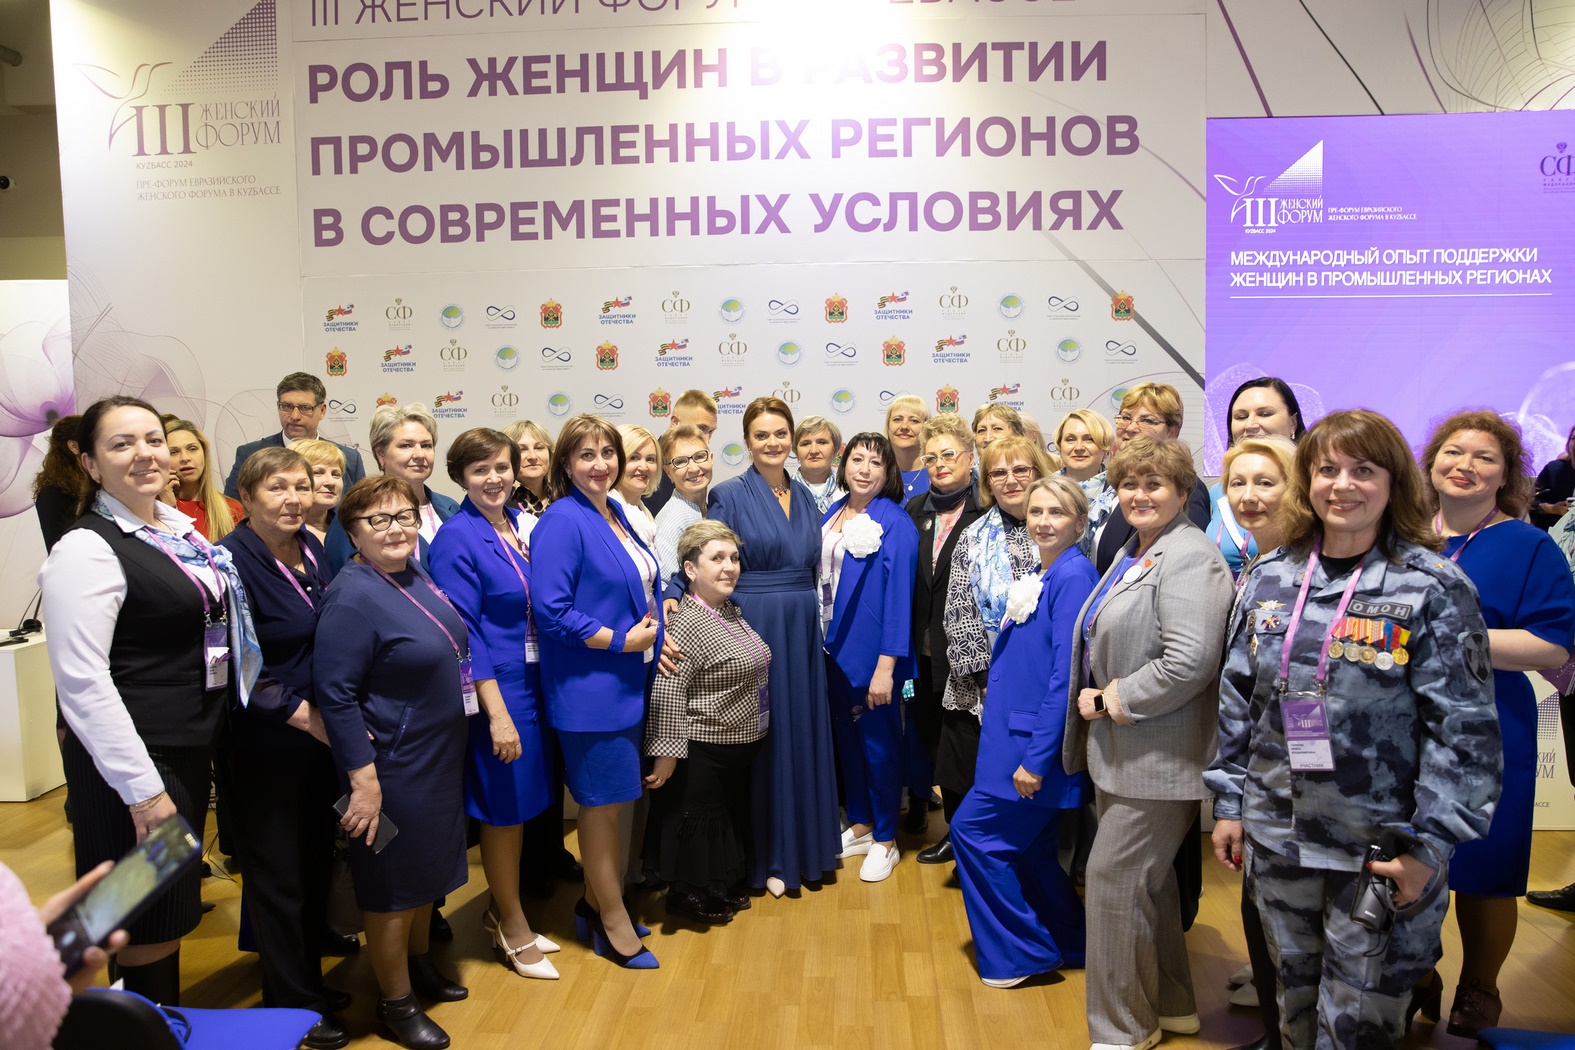  III Женский форум в Кузбассе завершен